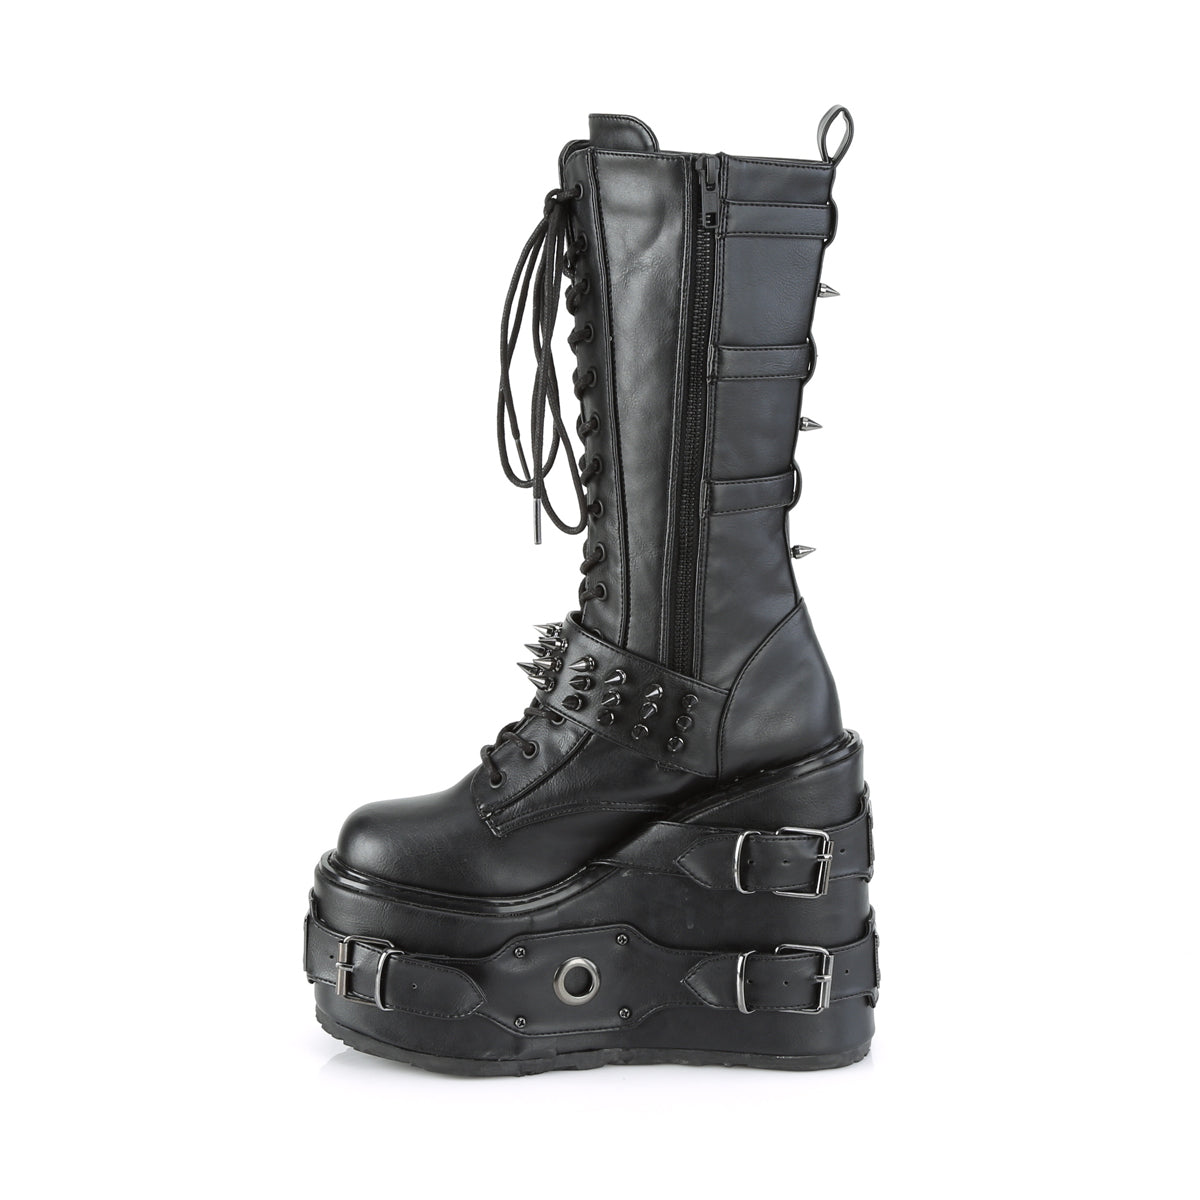 SWING-327 Demonia Black Vegan Leather Women's Mid-Calf & Knee High Boots [Demonia Cult Alternative Footwear]